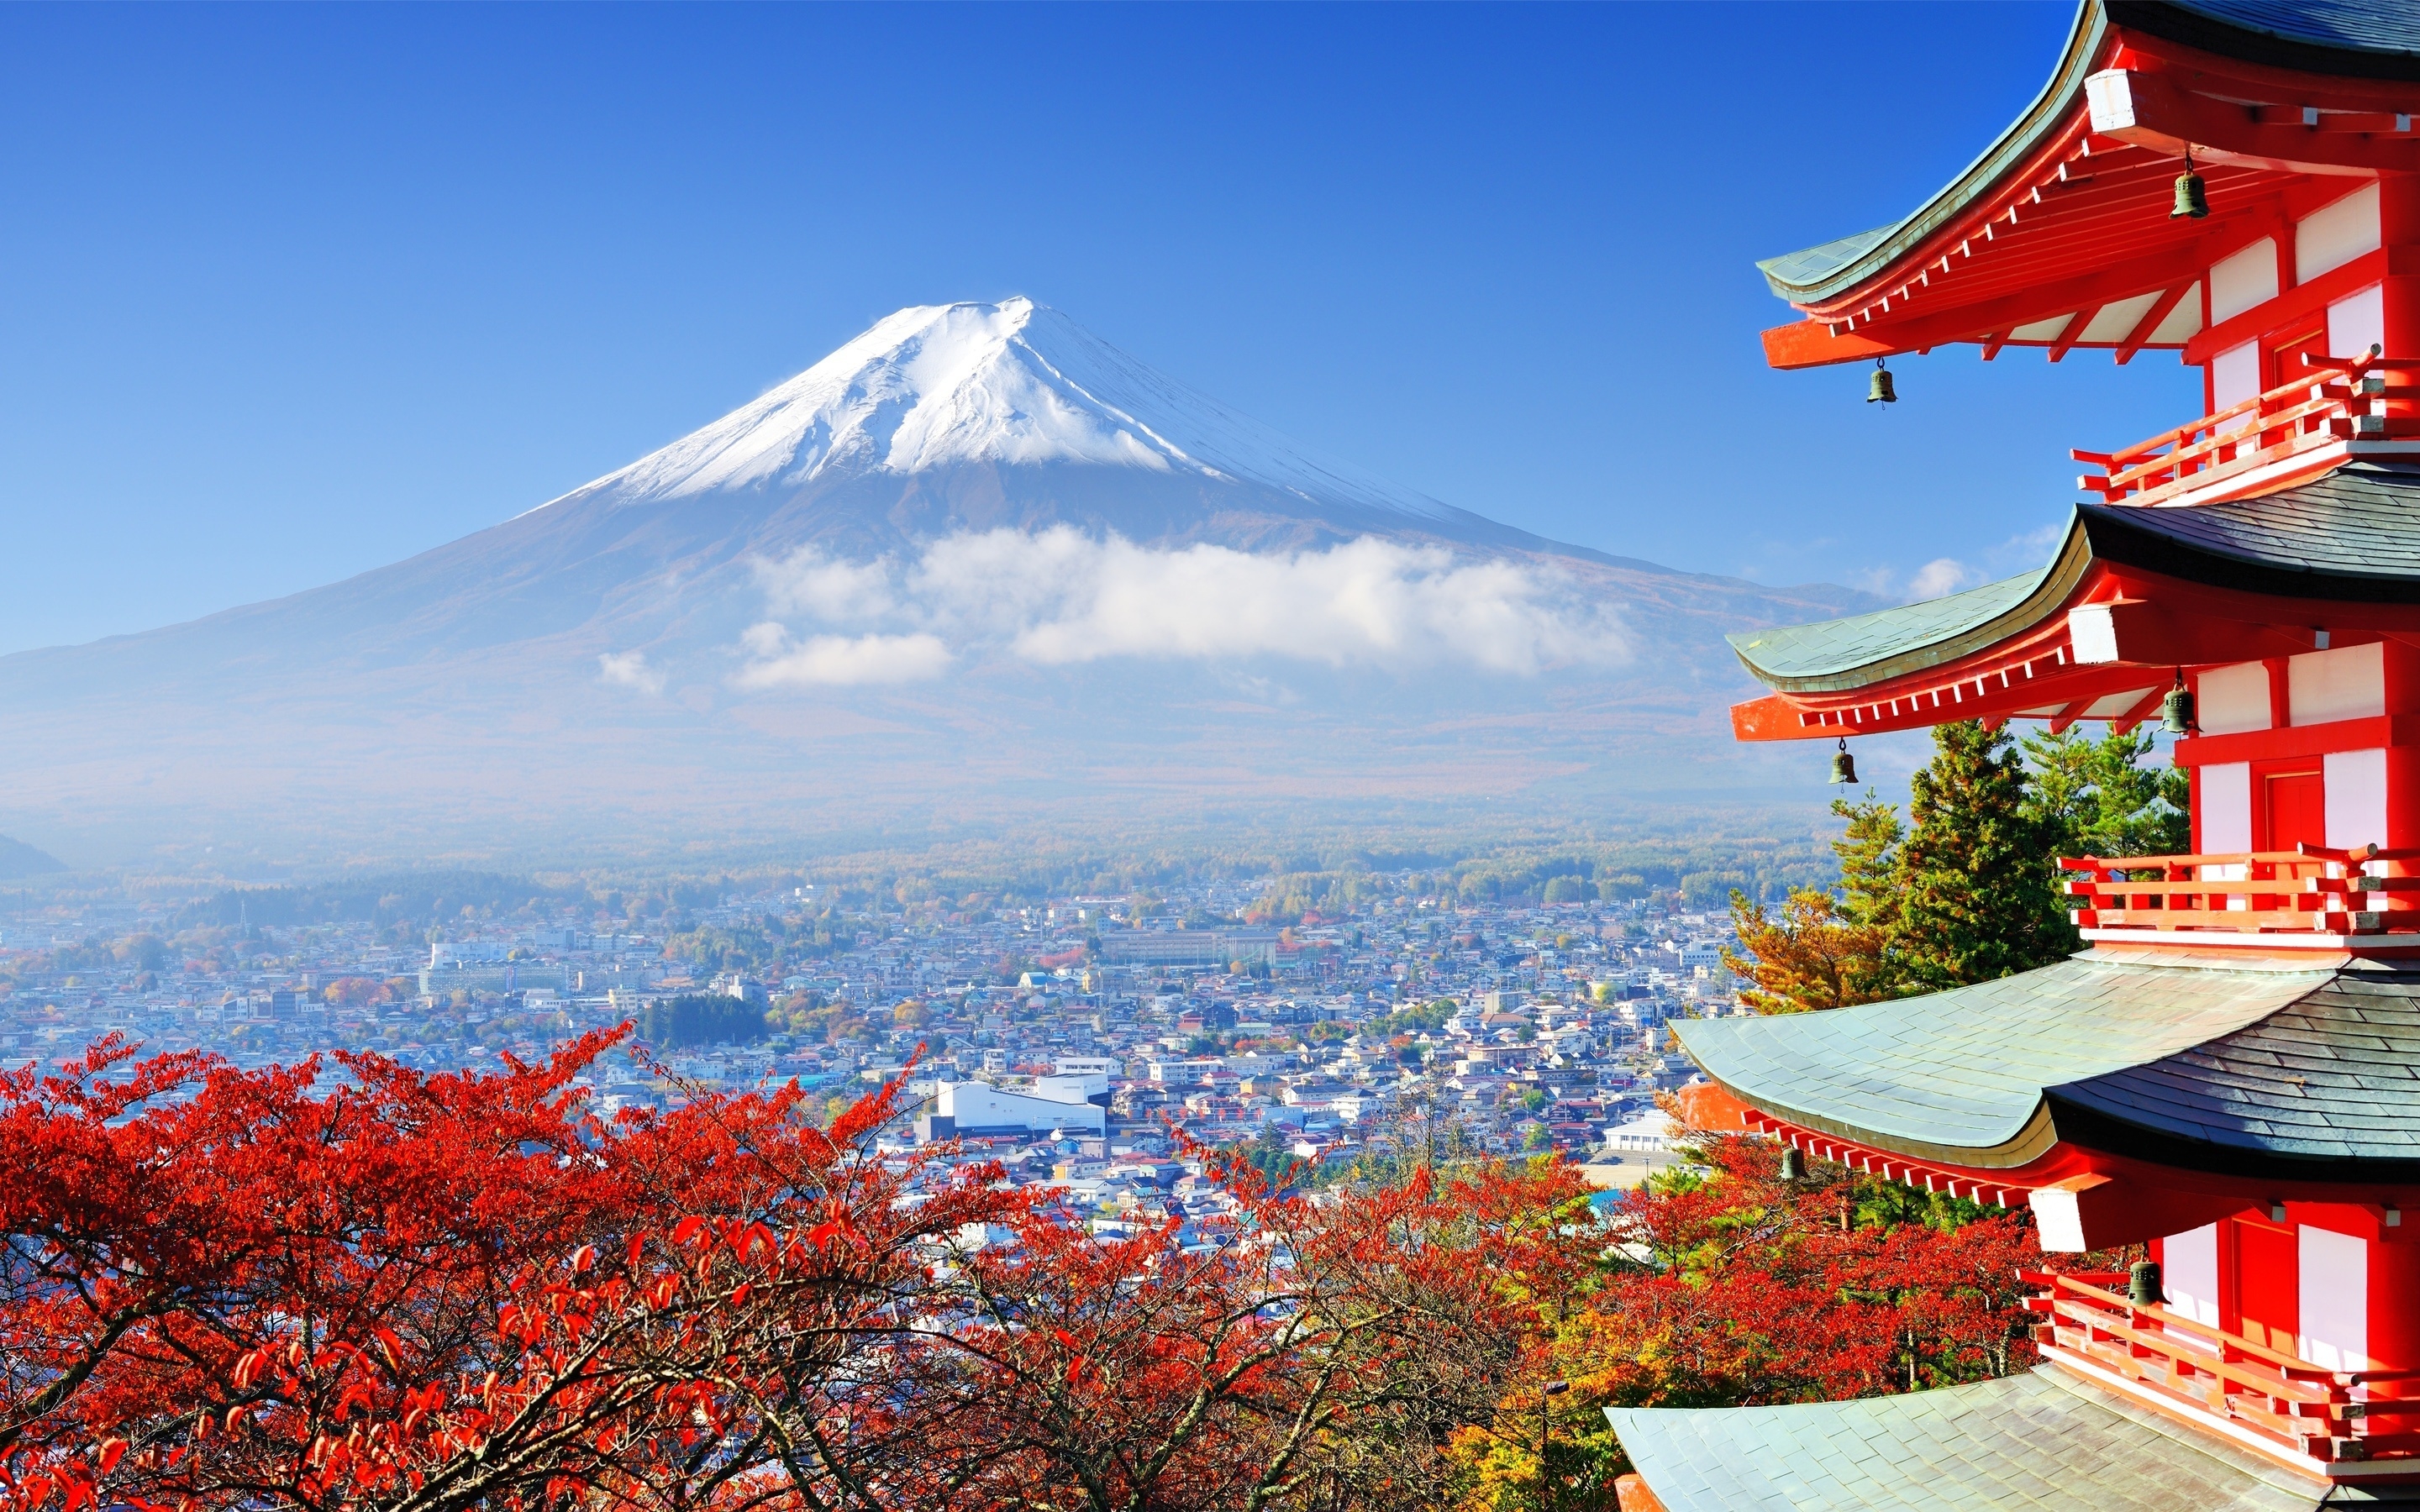 Fuji Mount in Japan for 2880 x 1800 Retina Display resolution